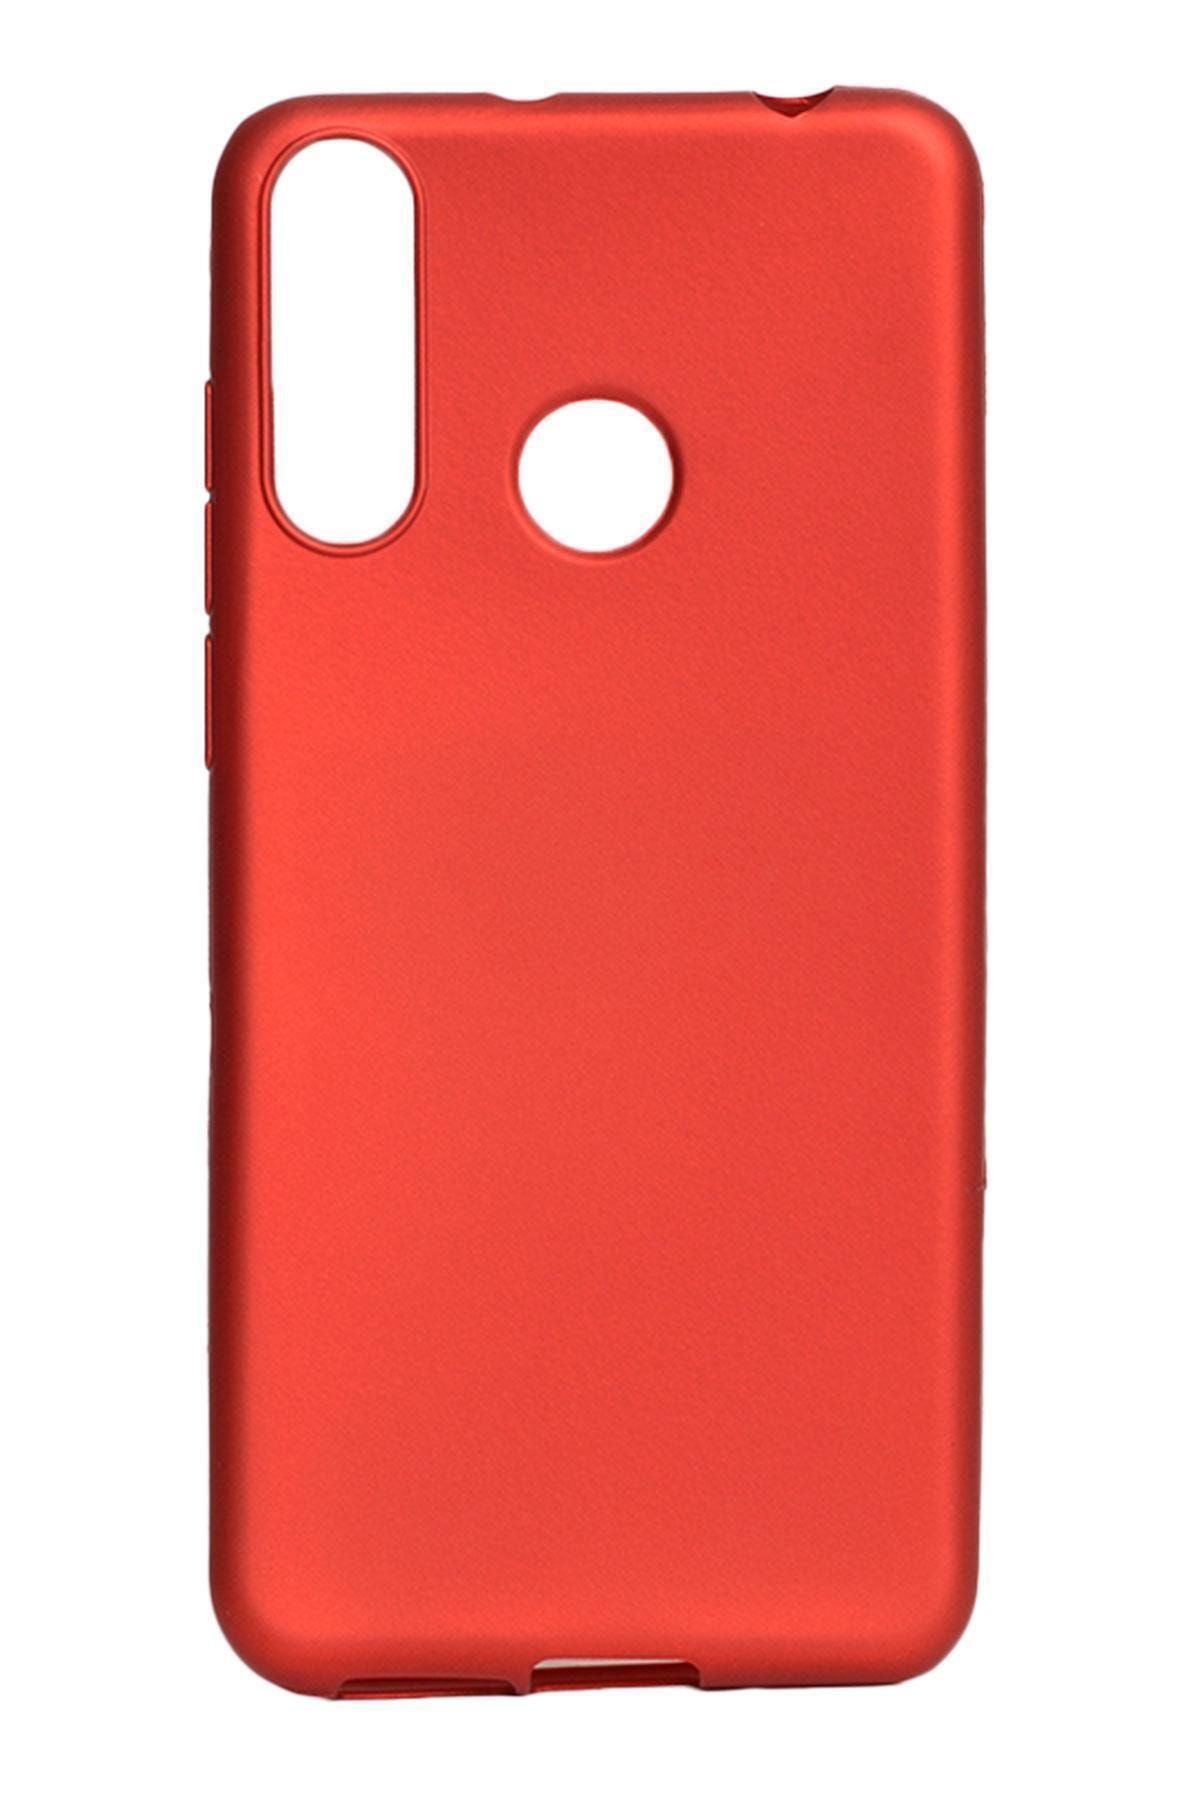 Casper Via F3 Uyumlu Kılıf Premier Renkli Esnek Silikon Kırmızı